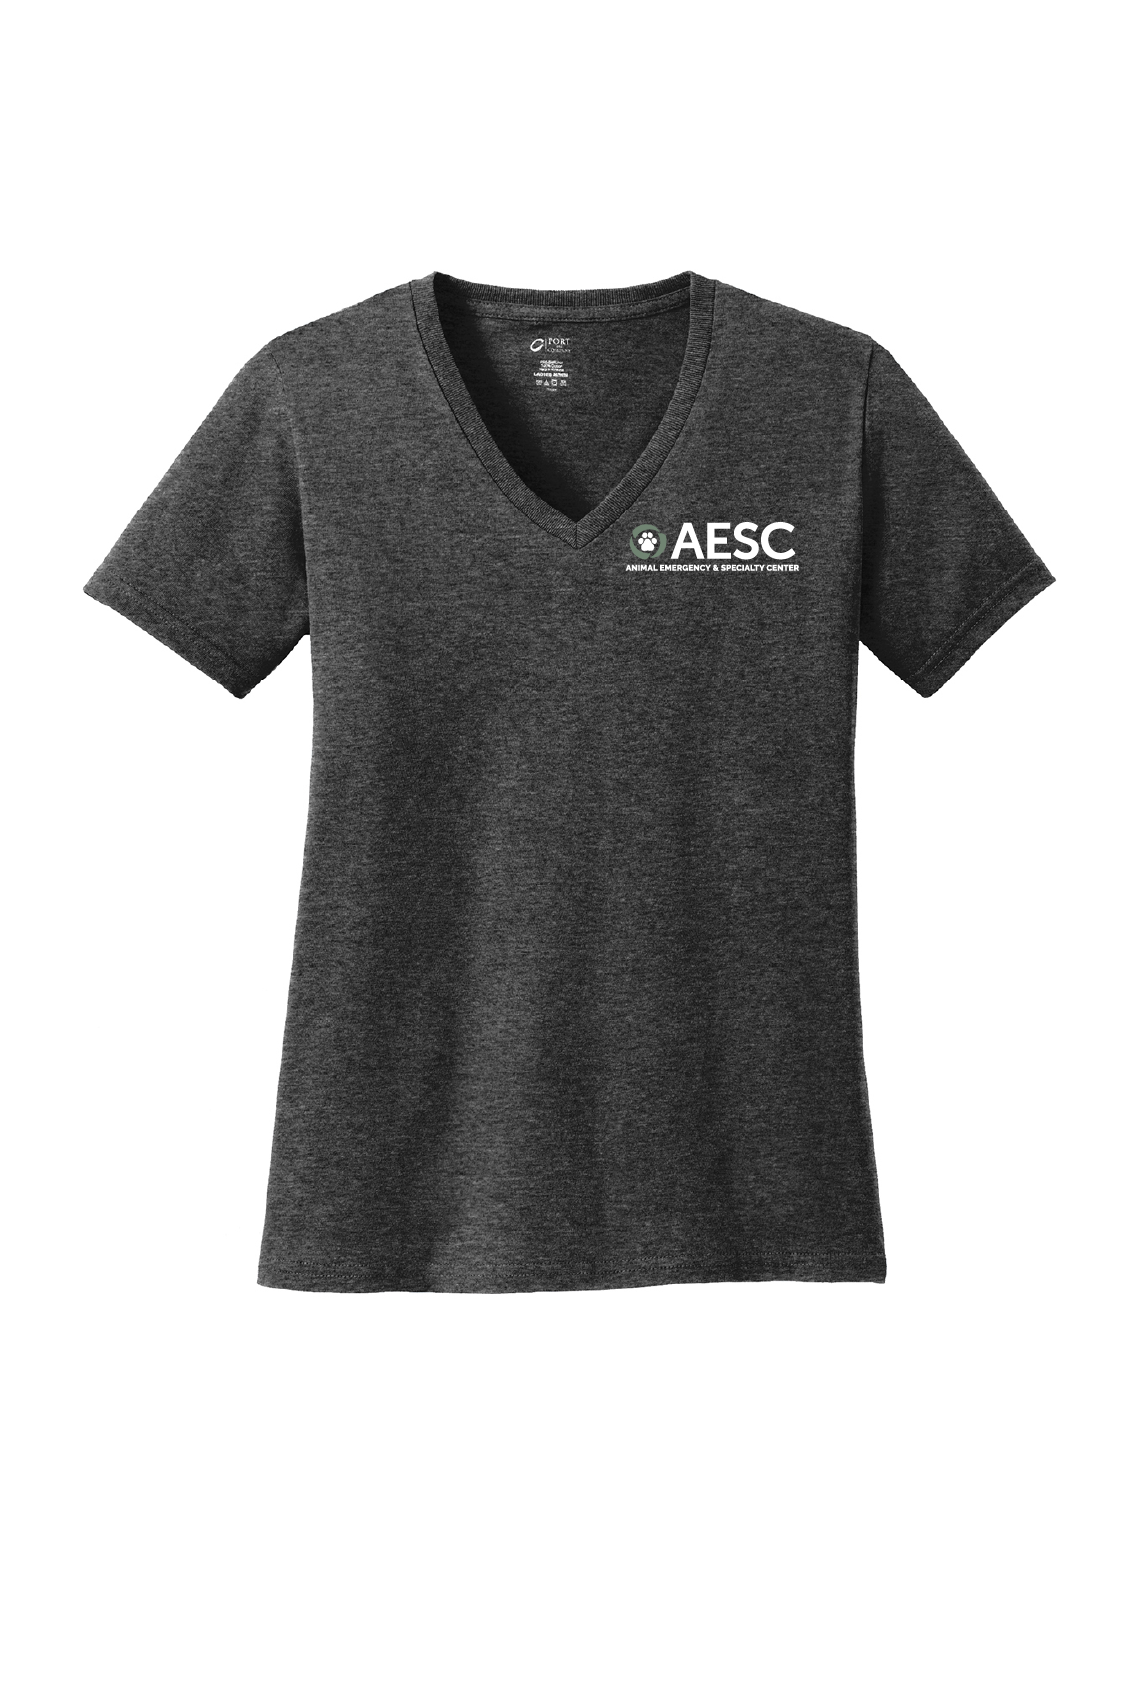 AESC Women’s Port & Company Cotton V-Neck Tee Dark Heather Grey